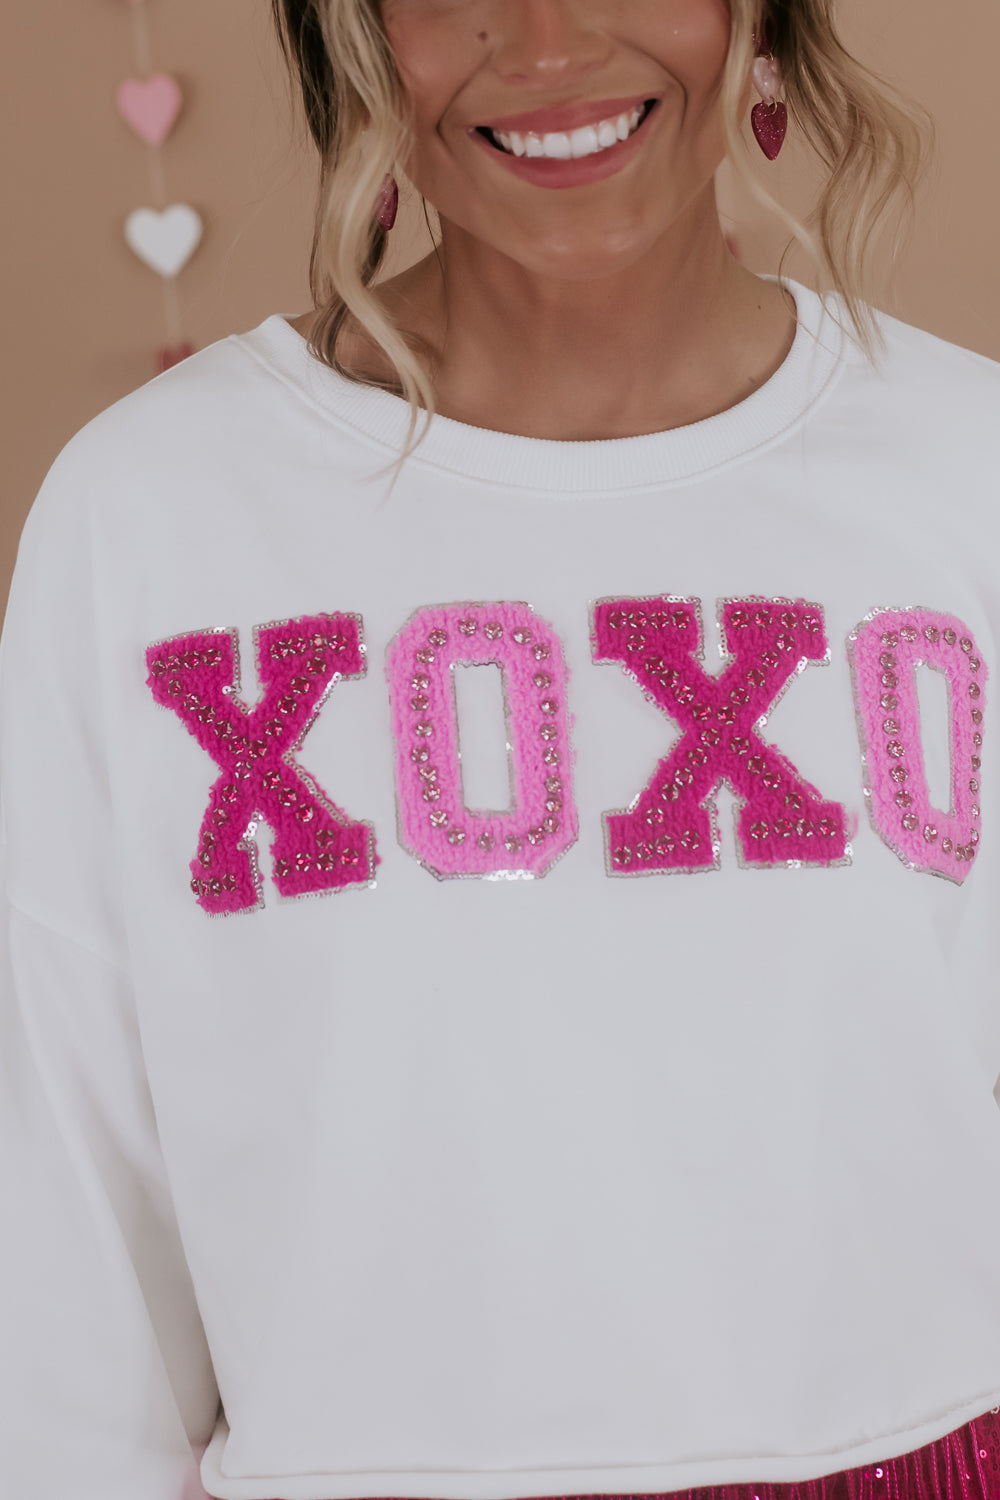 XOXO Cropped Sweatshirt, White